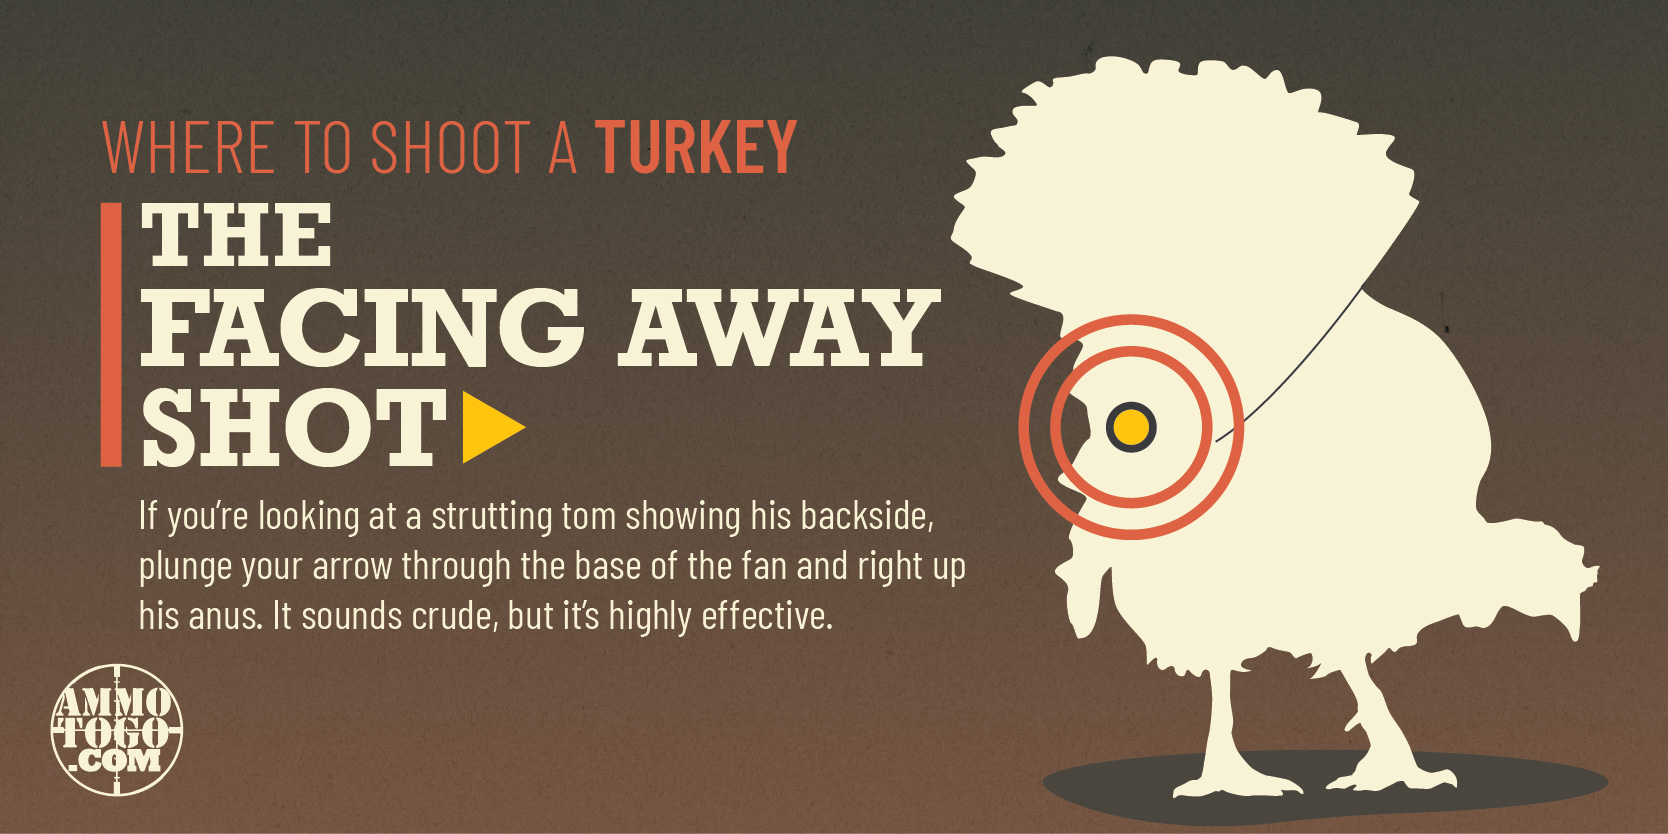 where to shoot a turkey when he's facing away